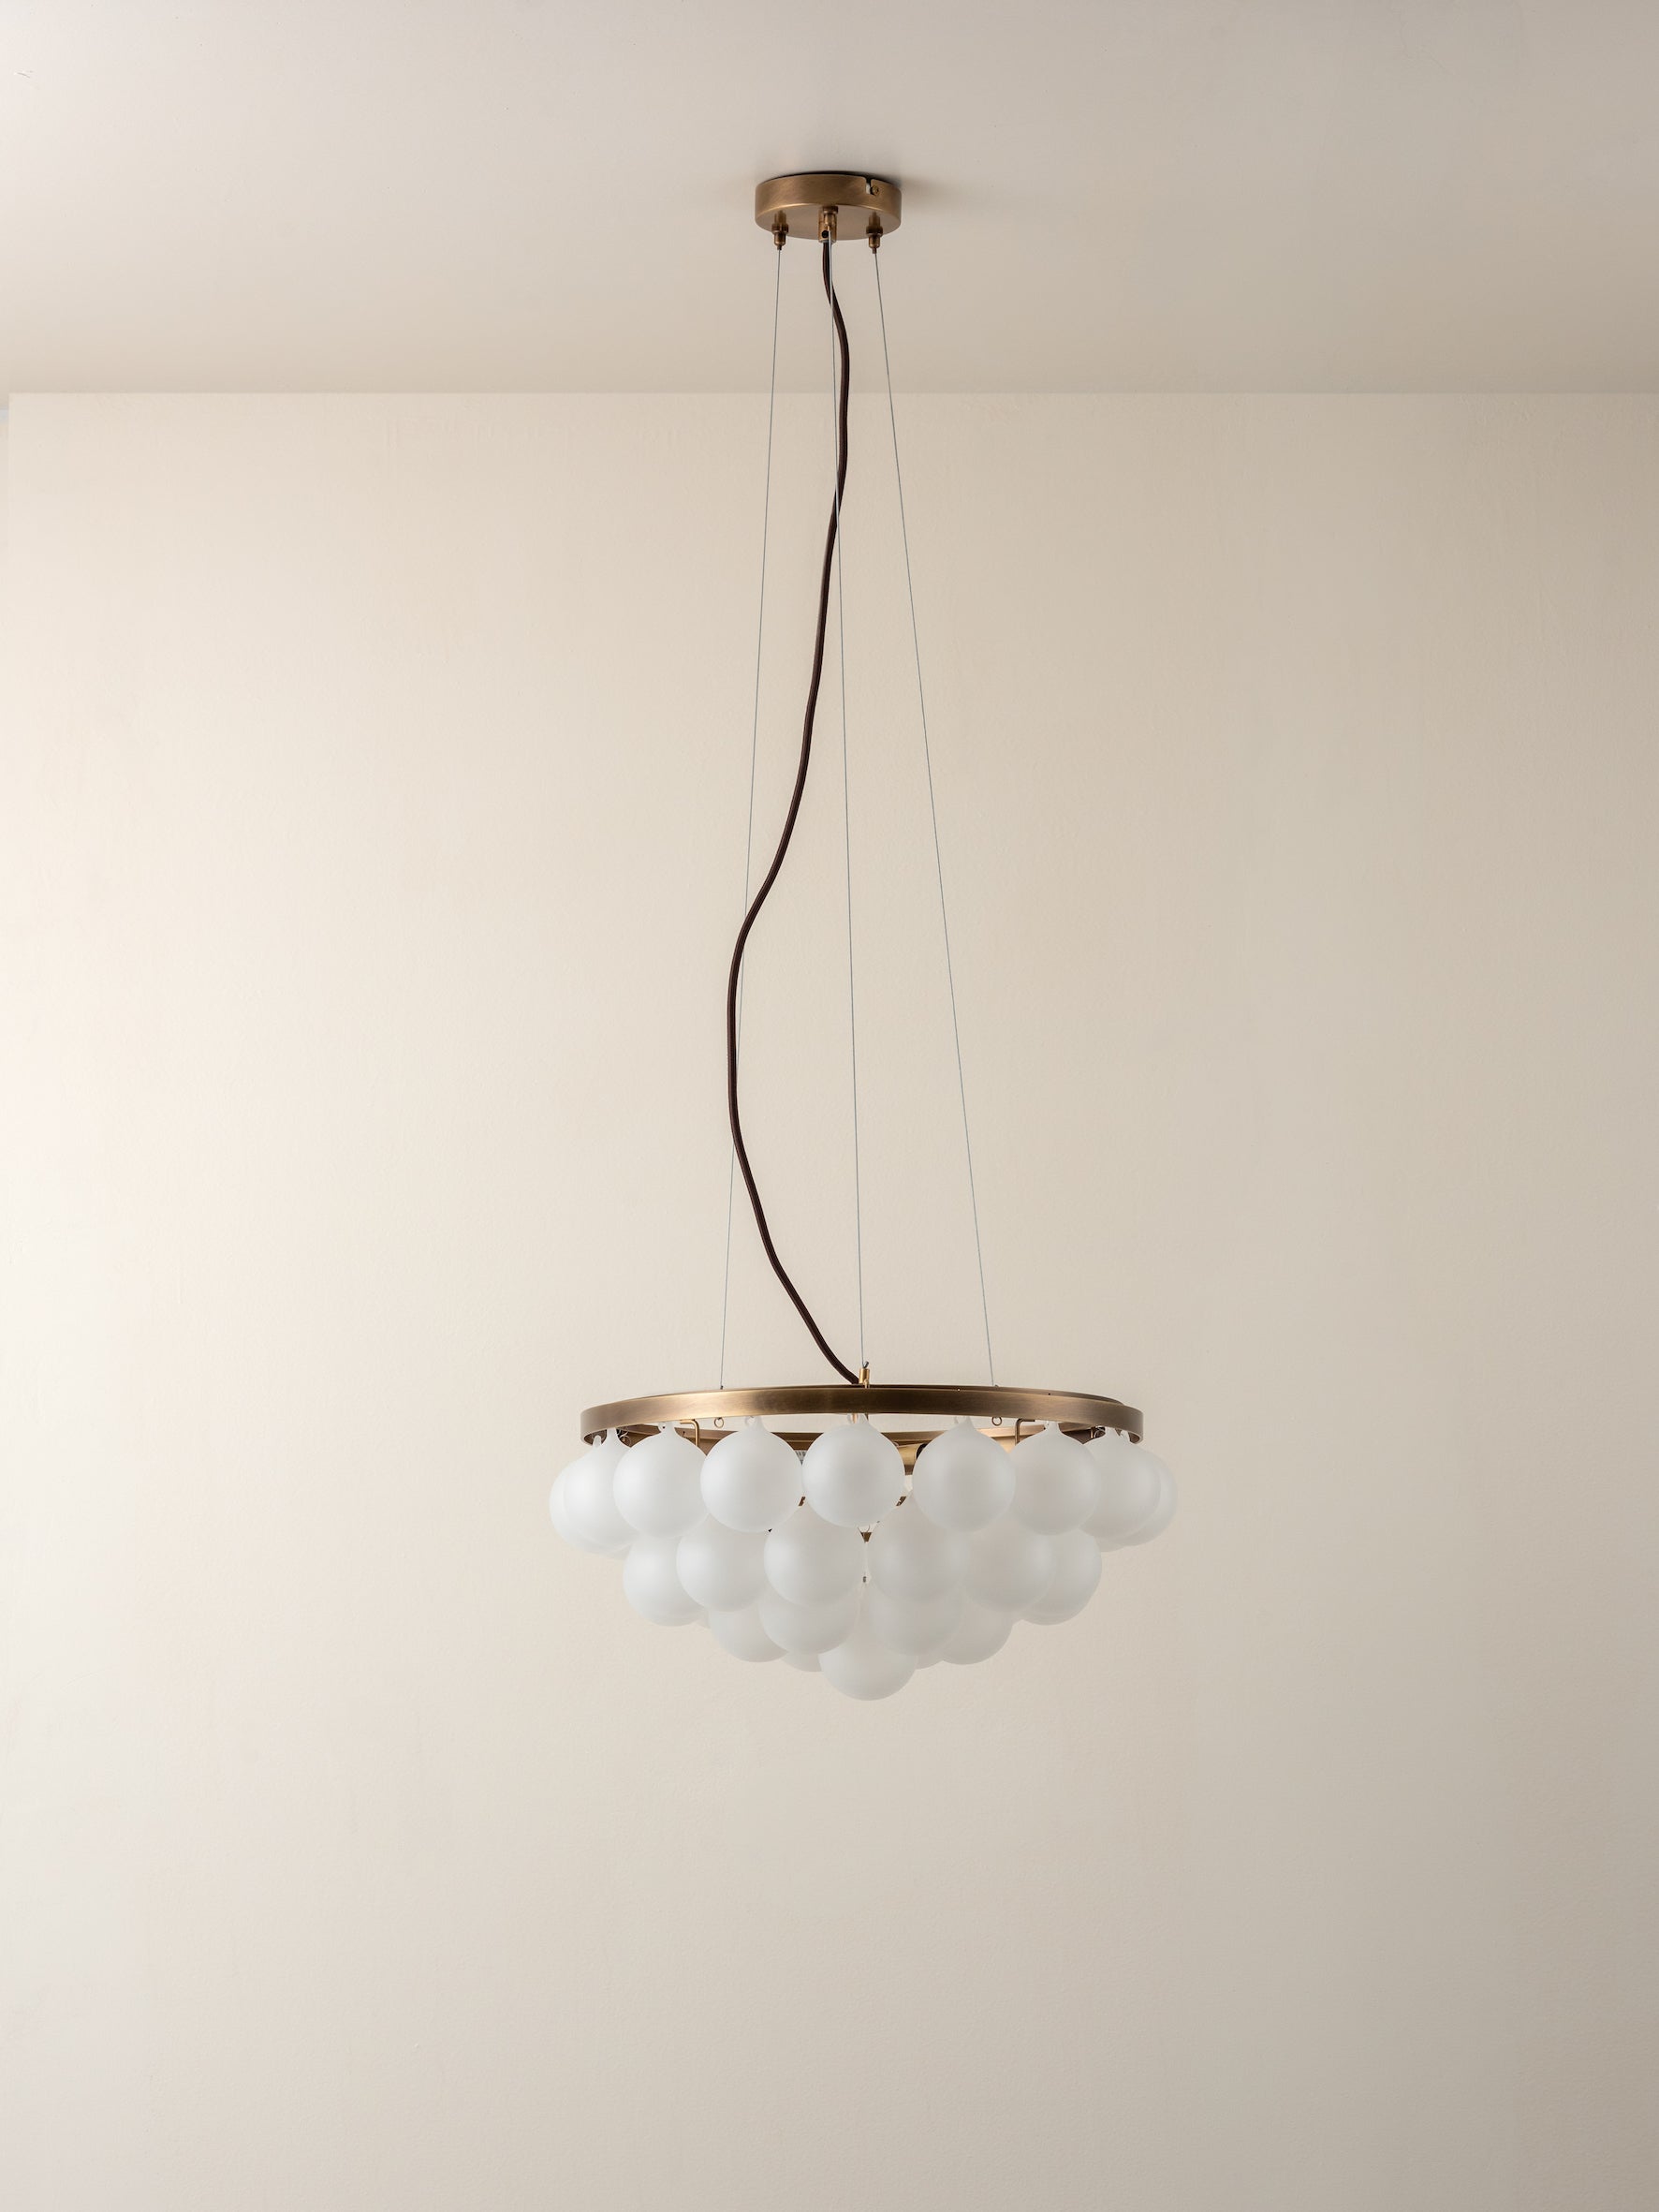 Cloudia - 3 light small white frosted brass chandelier | Chandelier | Lights & Lamps | UK | Modern Affordable Designer Lighting